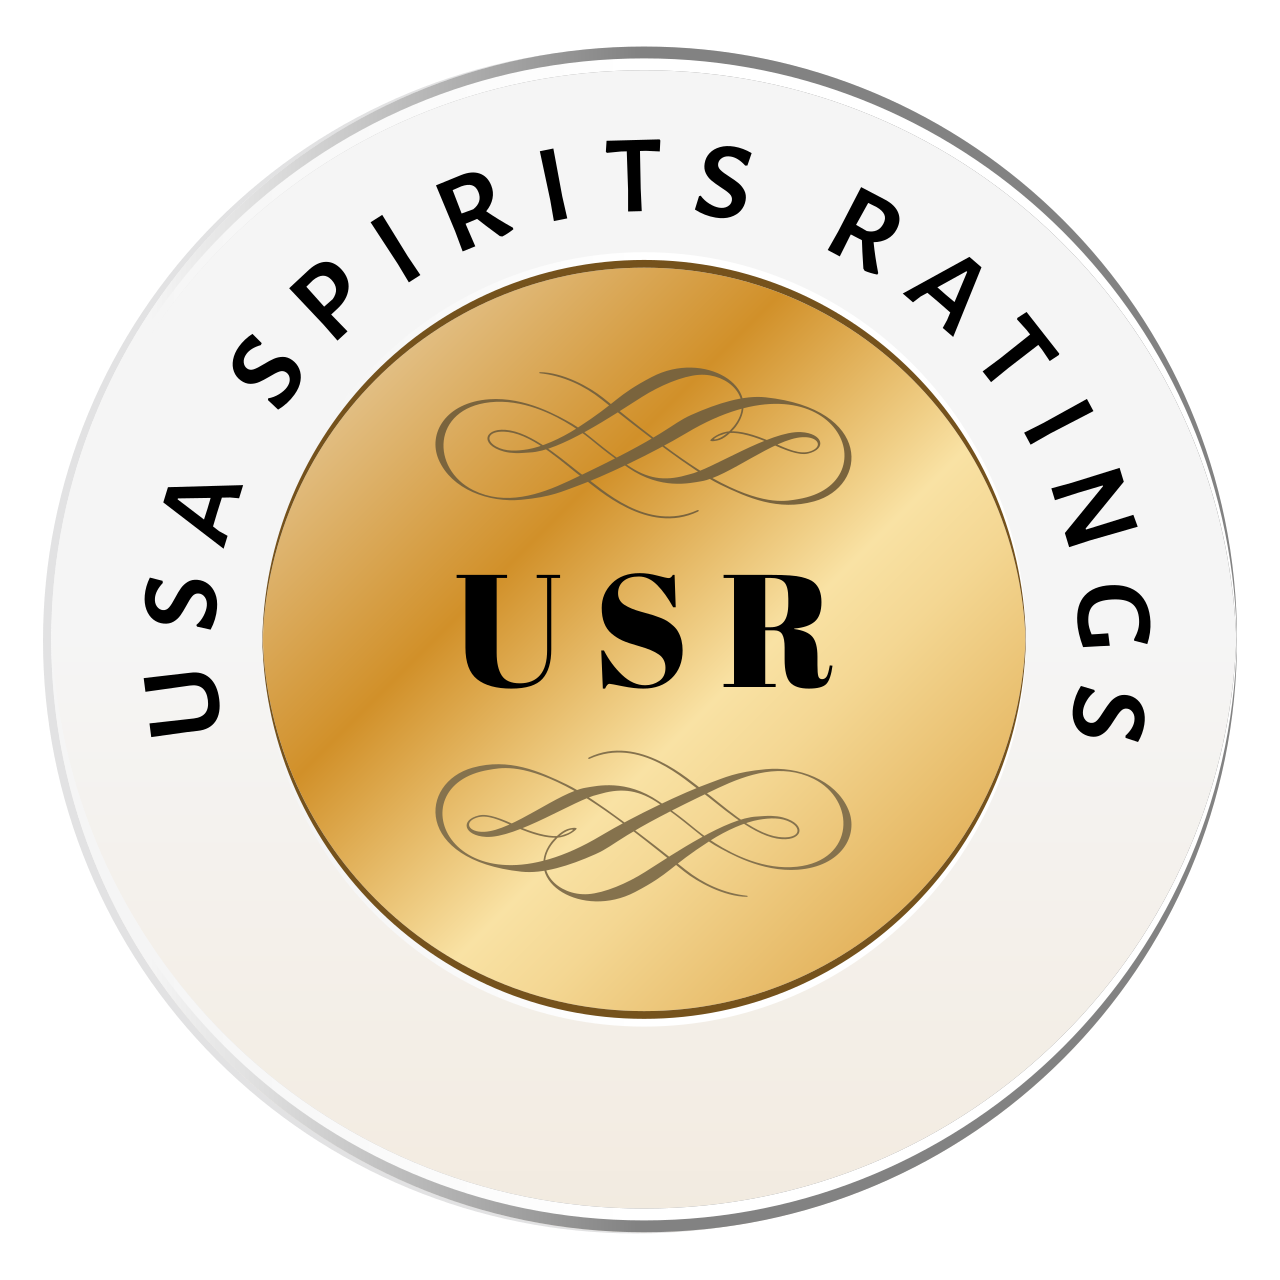 USA Spirits Ratings Gold Medal